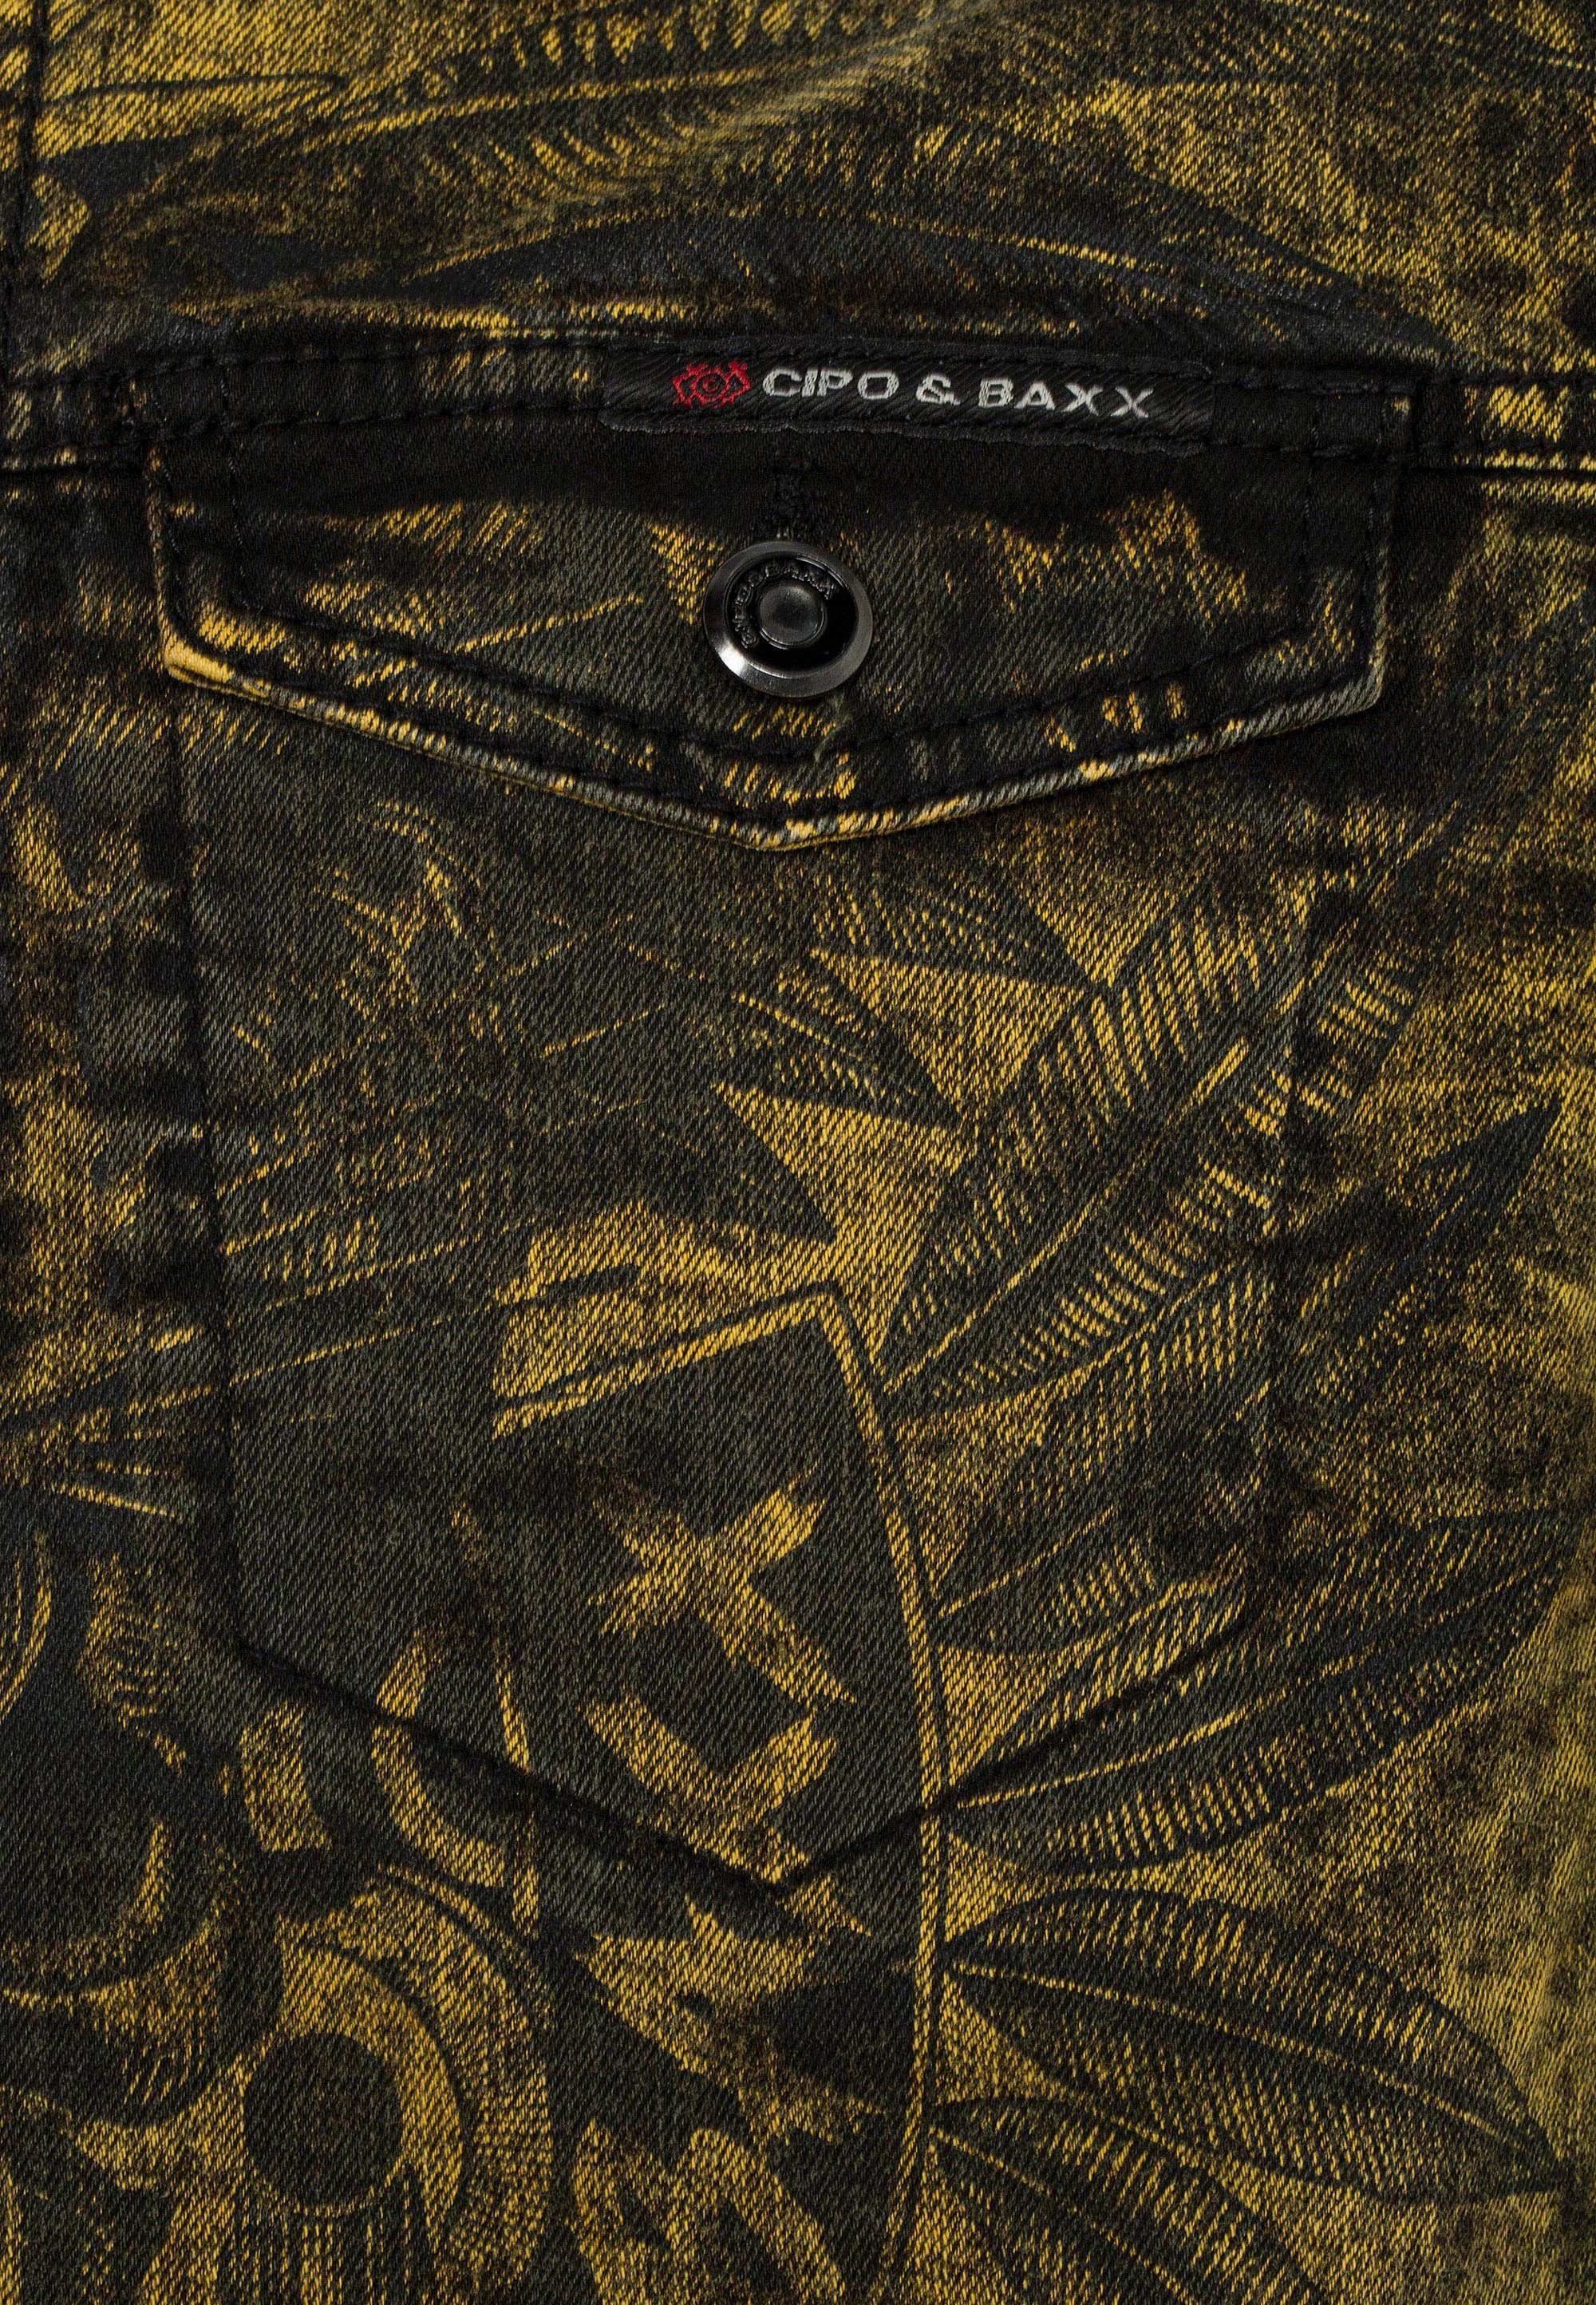 Cipo & Baxx mit Jeansjacke Nietendetails rockigen